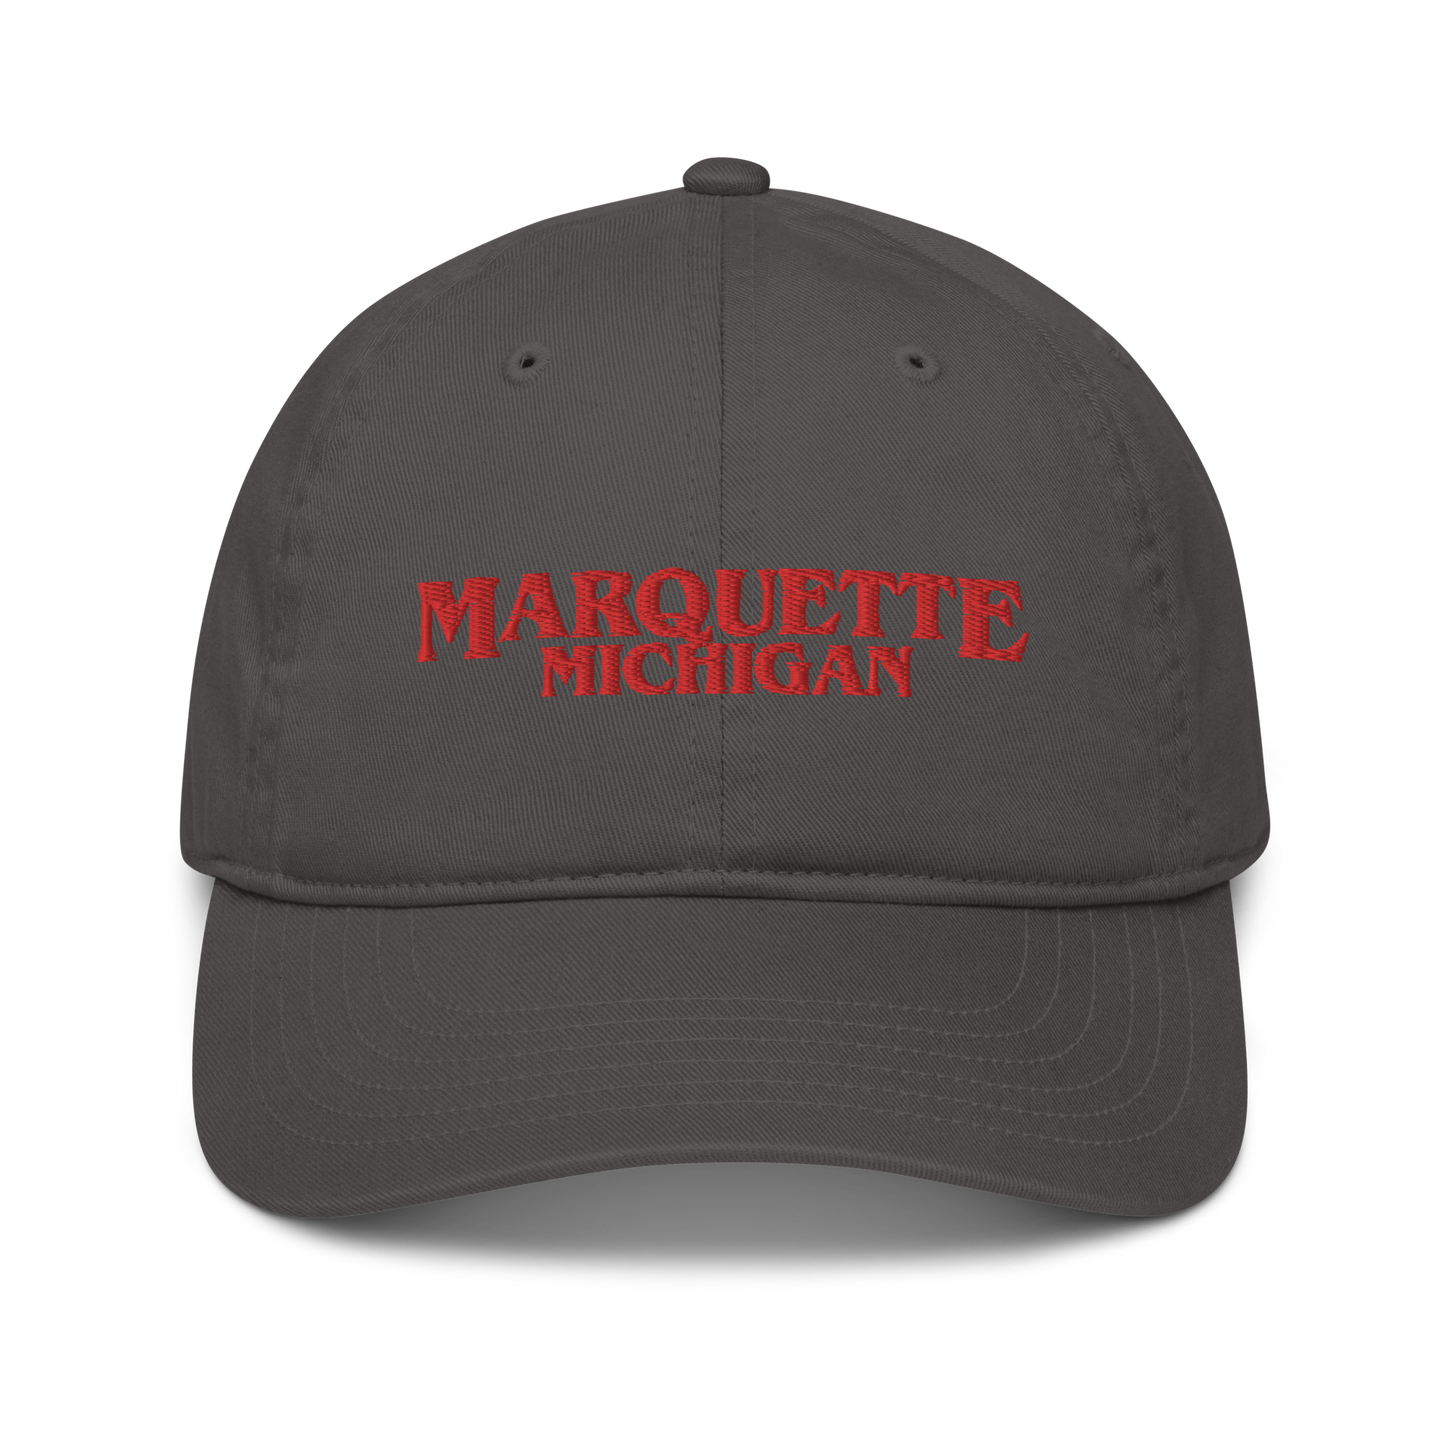 'Marquette Michigan' Classic Baseball Cap (1980s Drama Parody)